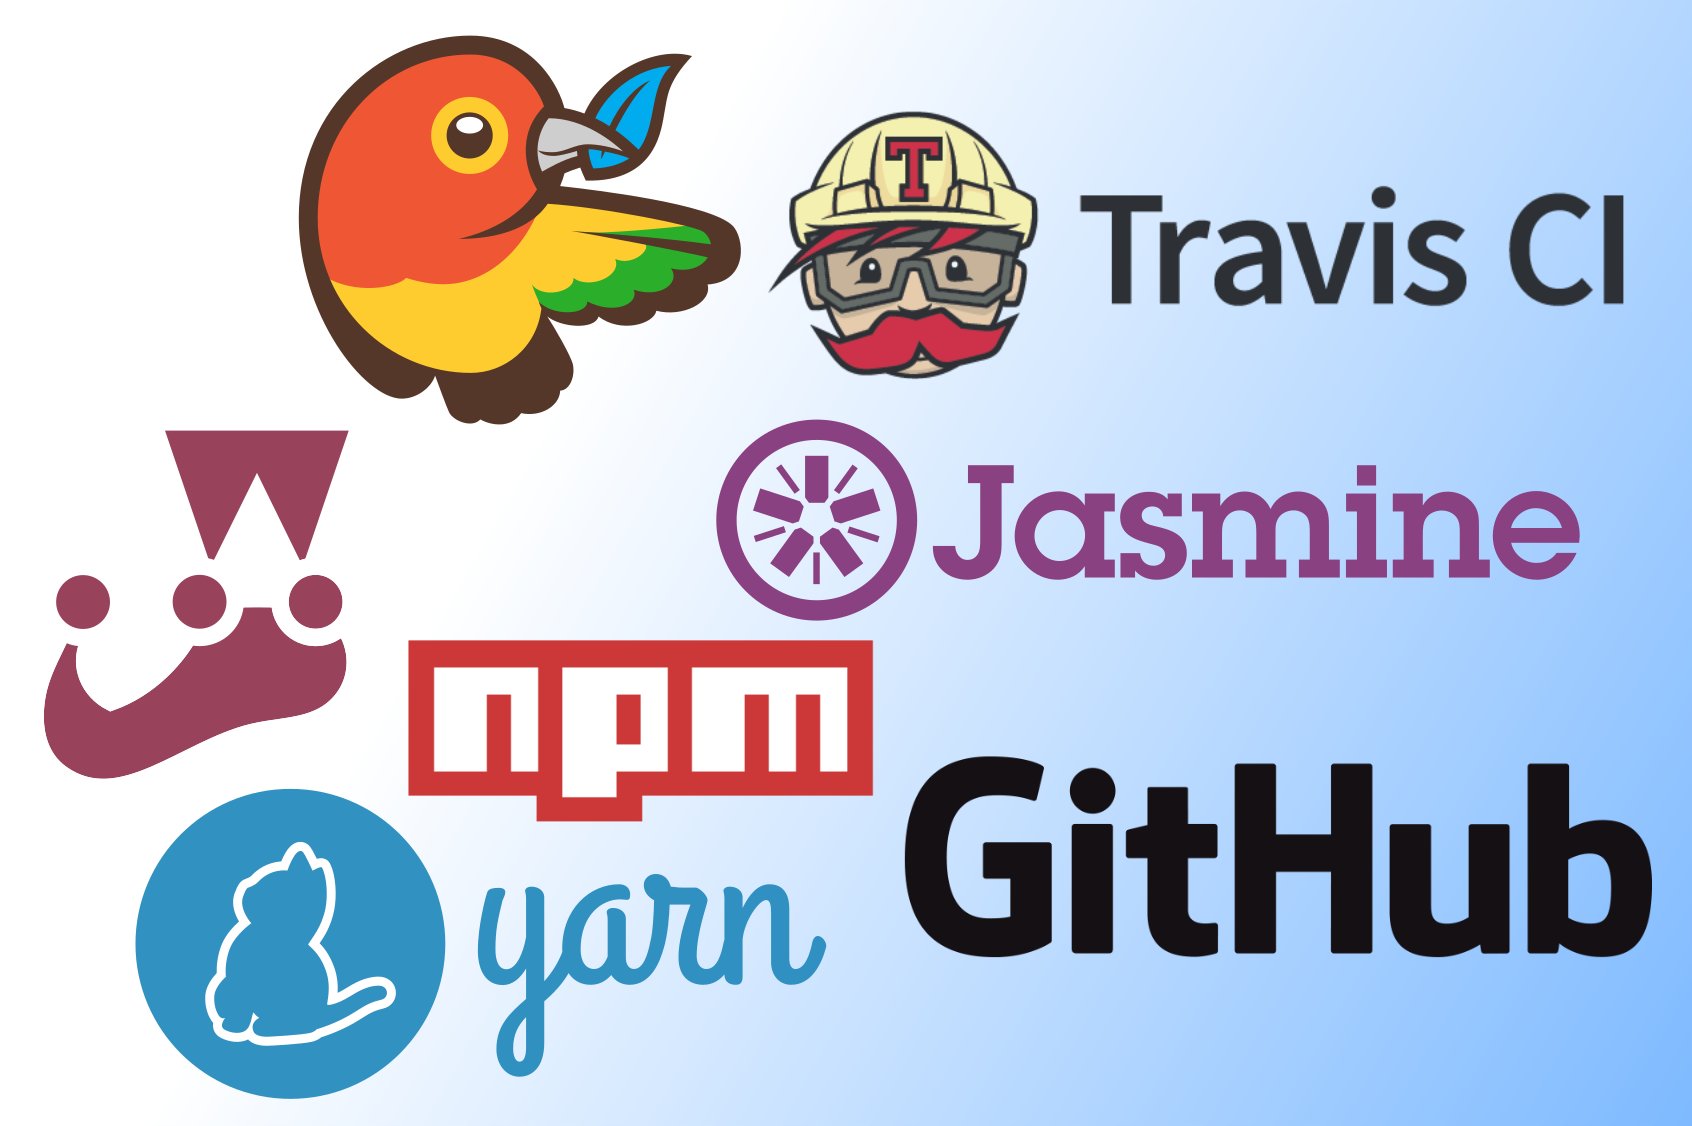 Logos for JavaScript tools